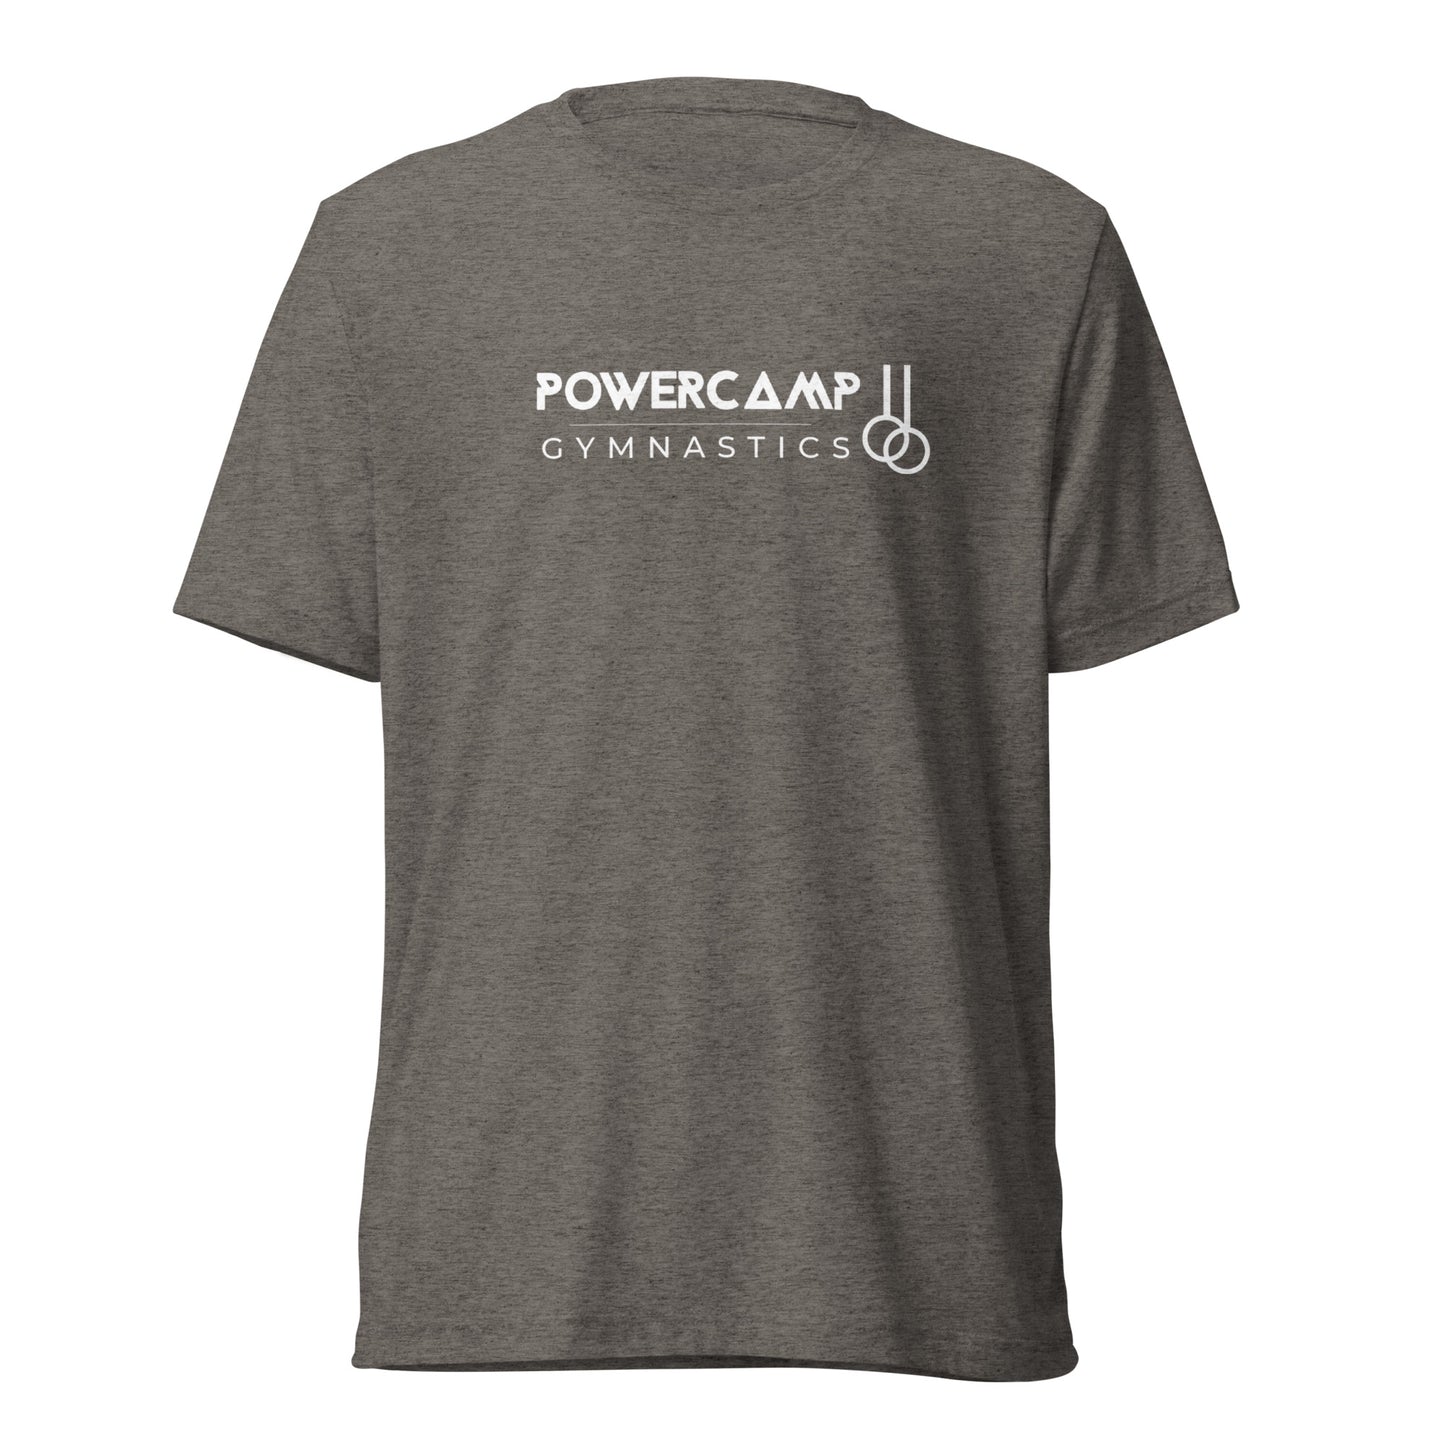 T-shirt Powercamp gymnastics